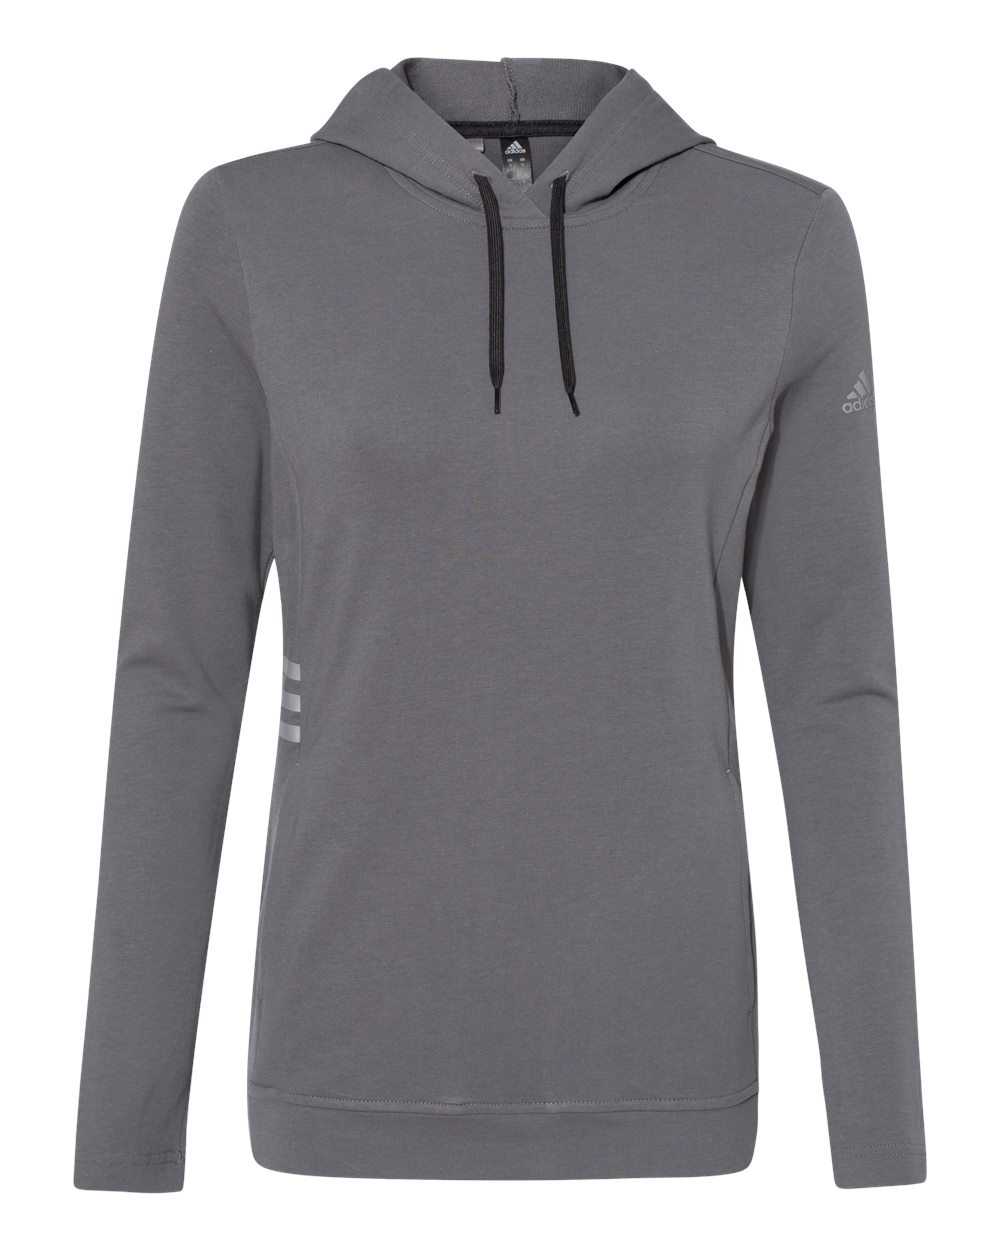 Adidas A451 Women's Lightweight Hooded Sweatshirt - Grey Five - HIT a Double